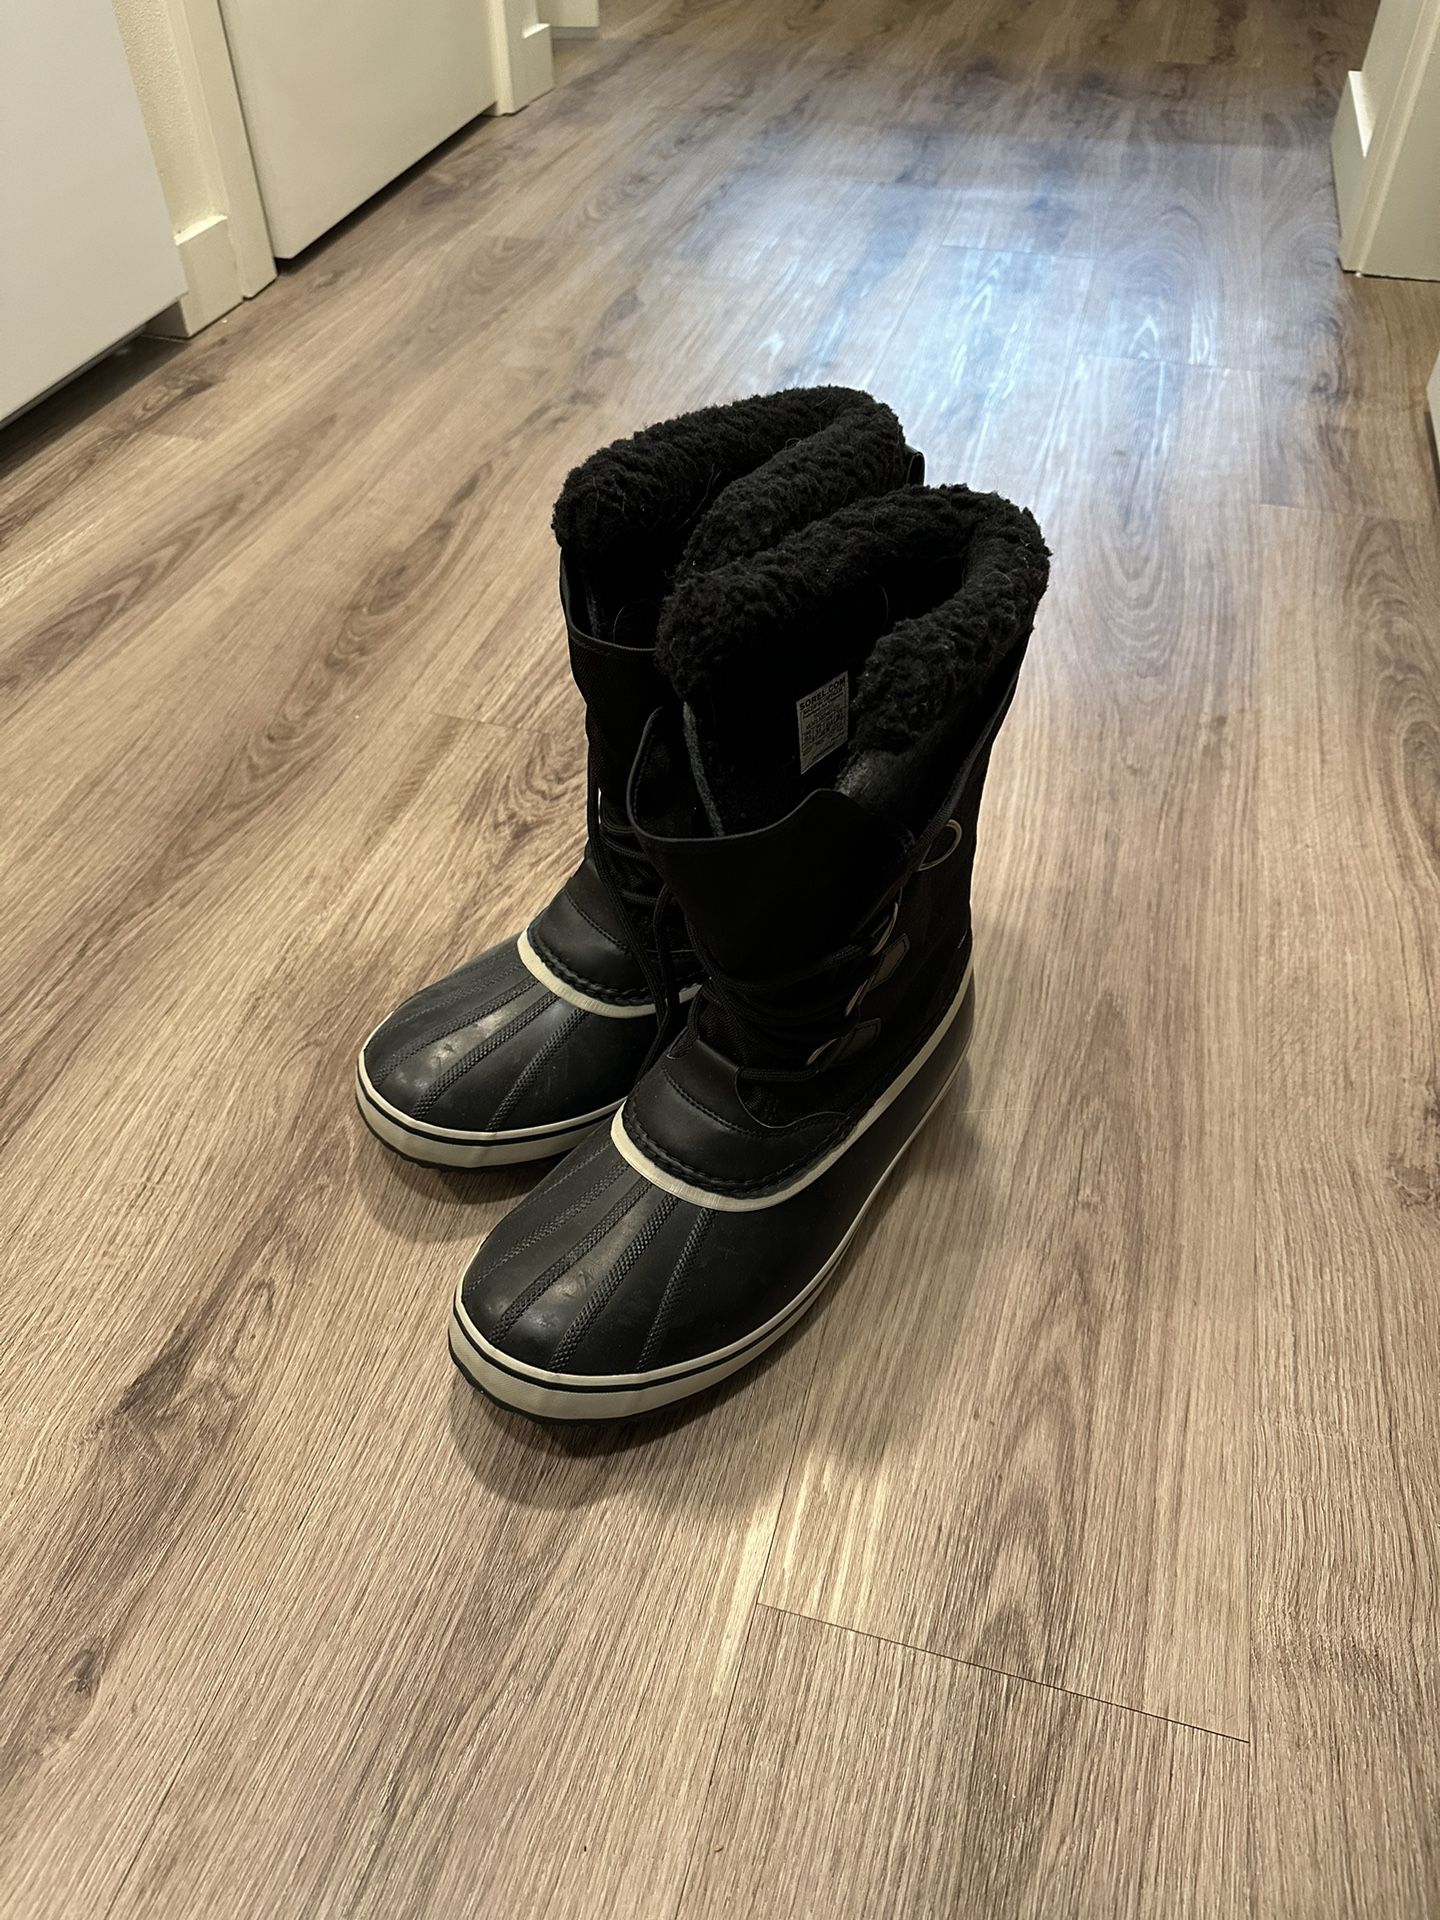 Sorel Snow Boots 10.5M